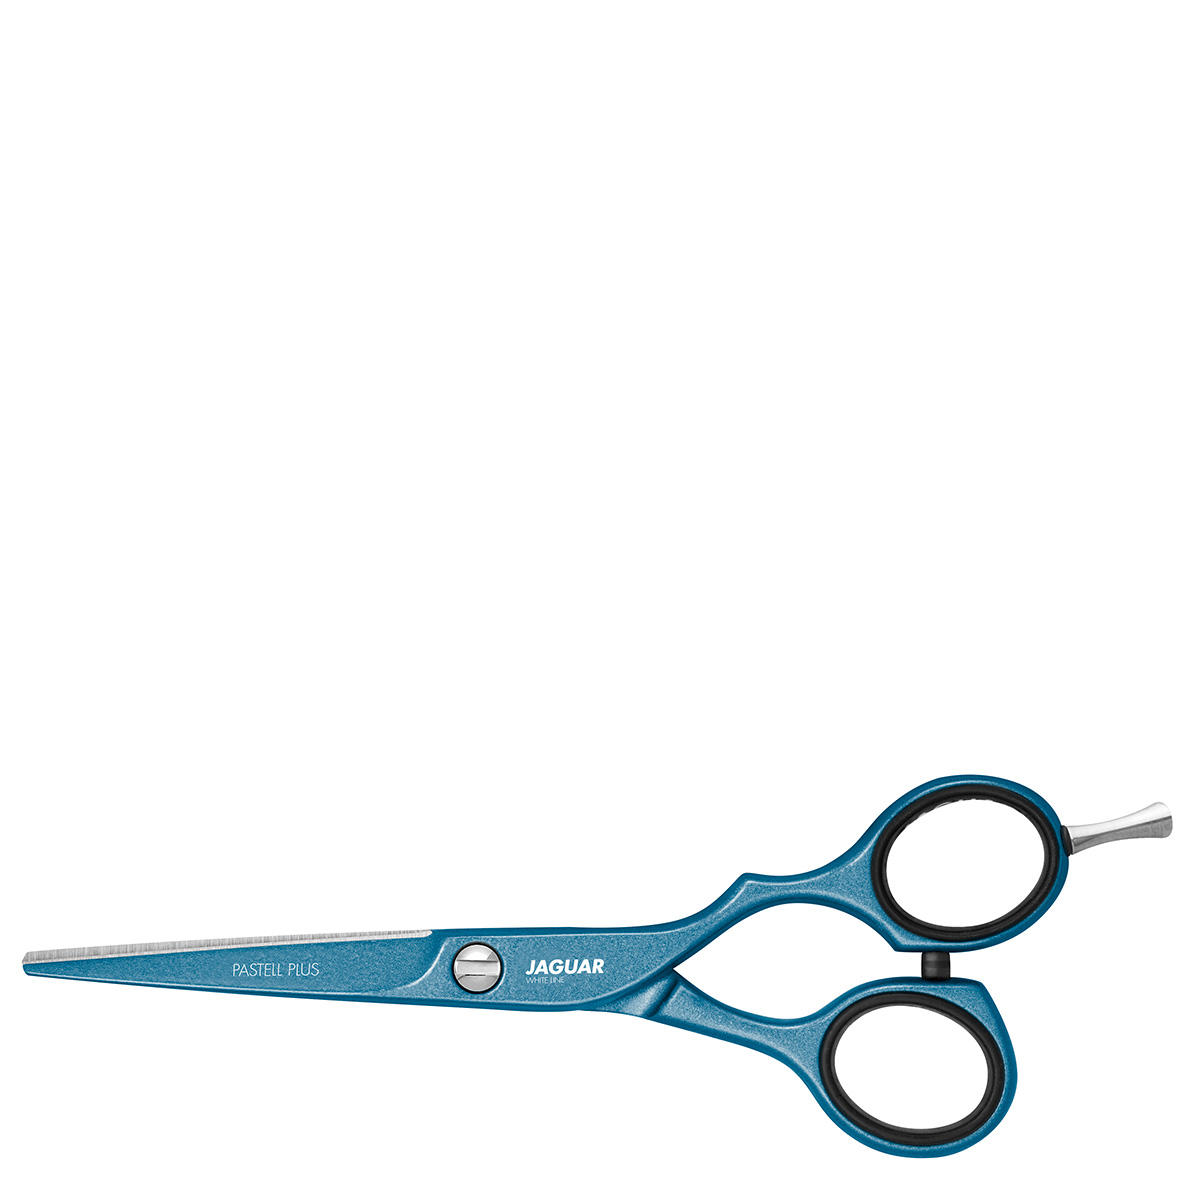 Jaguar Hair scissors Pastel Plus Offset 5½", Atlantic